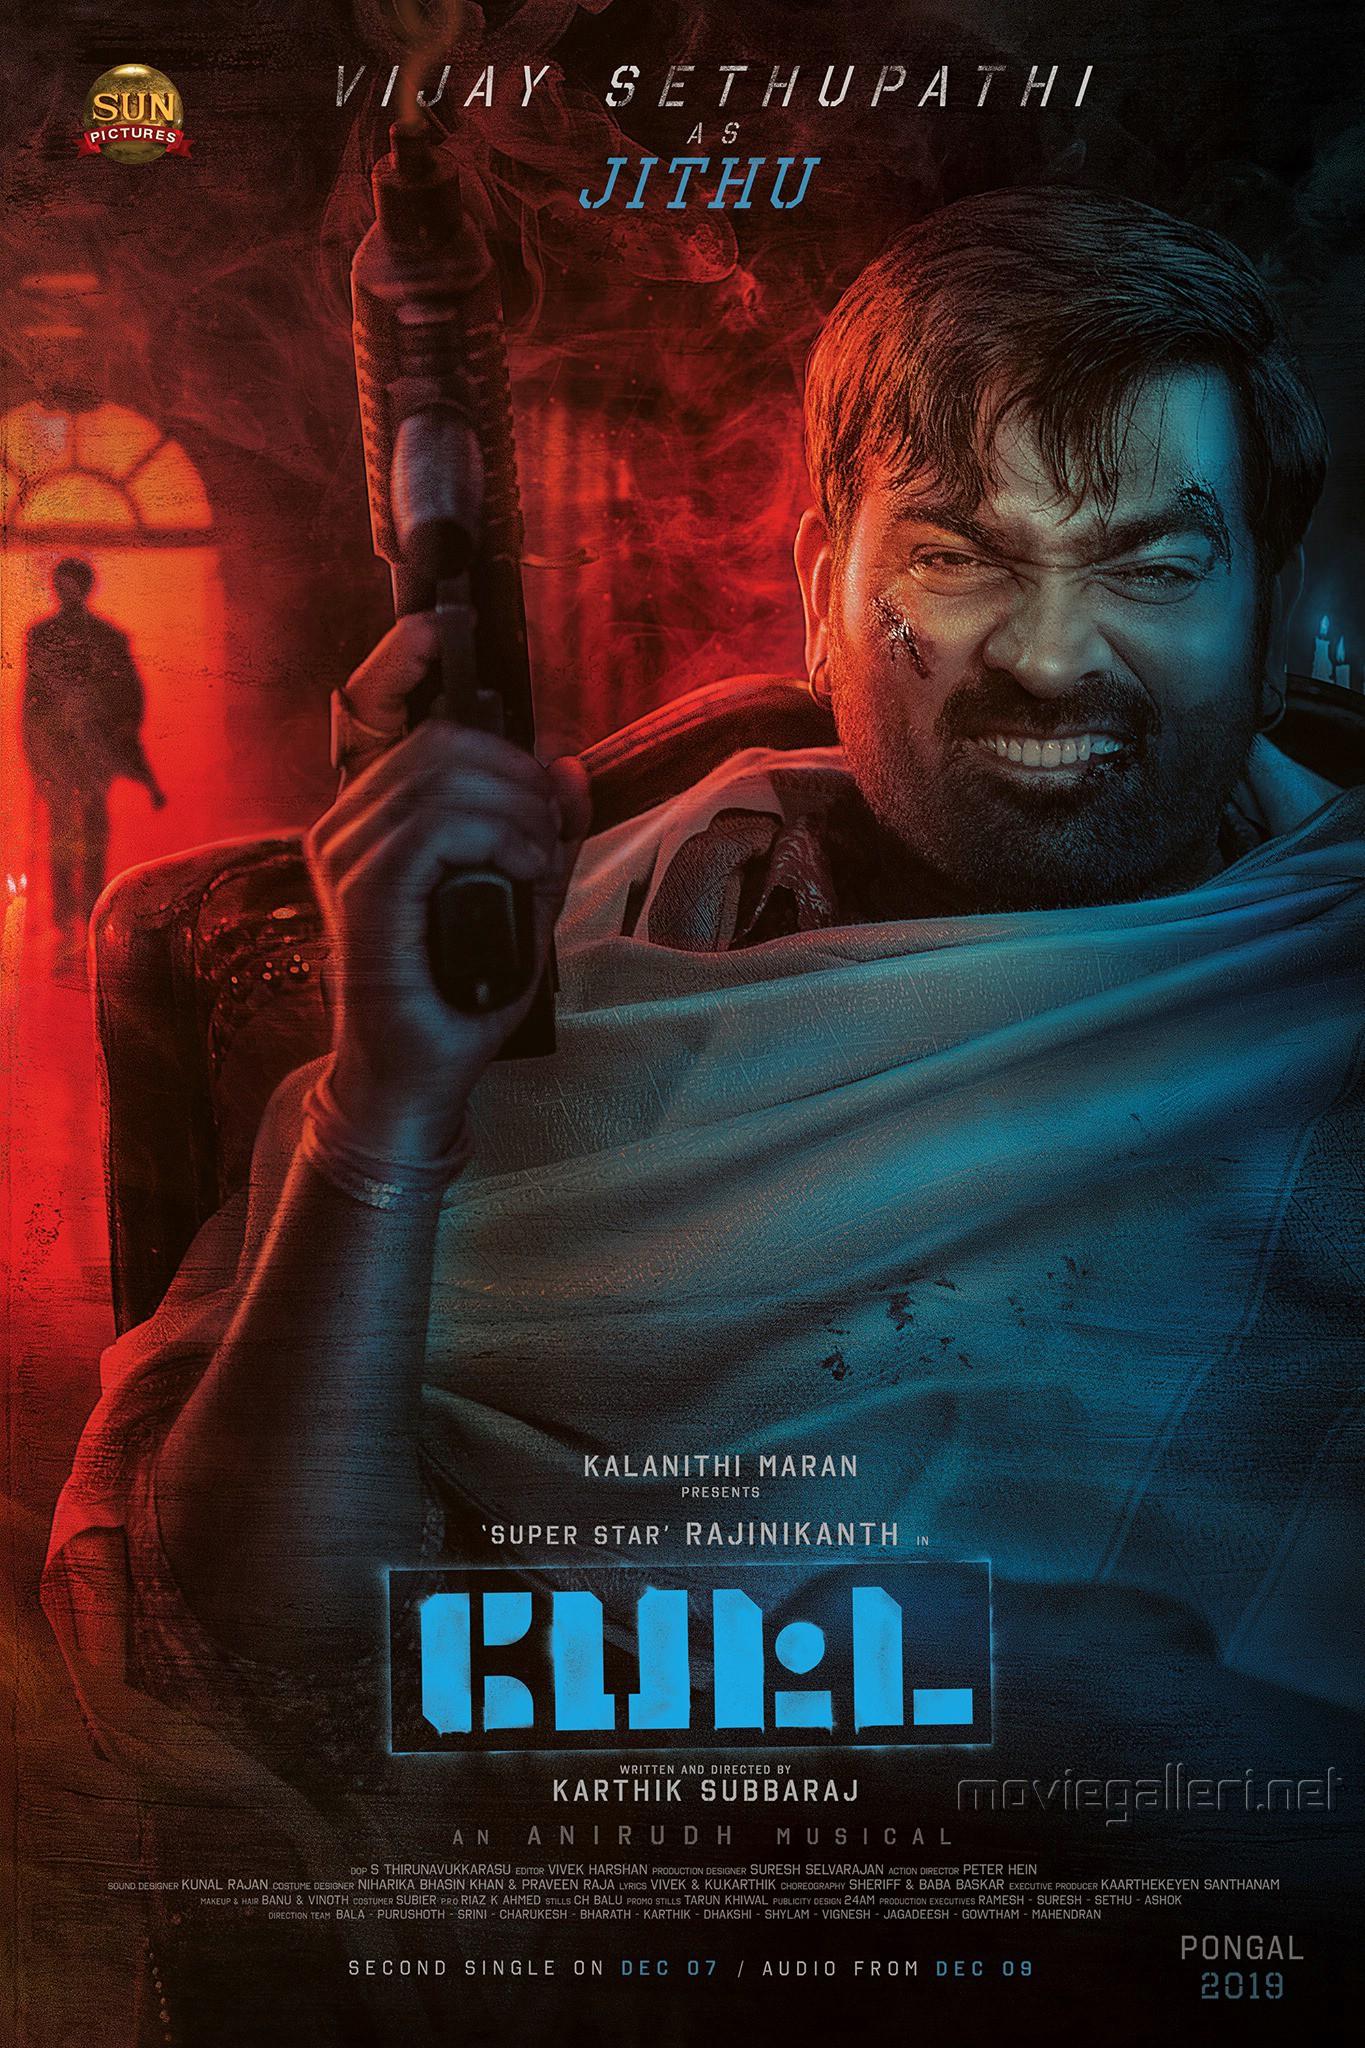 Vijay Sethupathi as Jithu in Petta Movie Poster HD. New Movie Posters